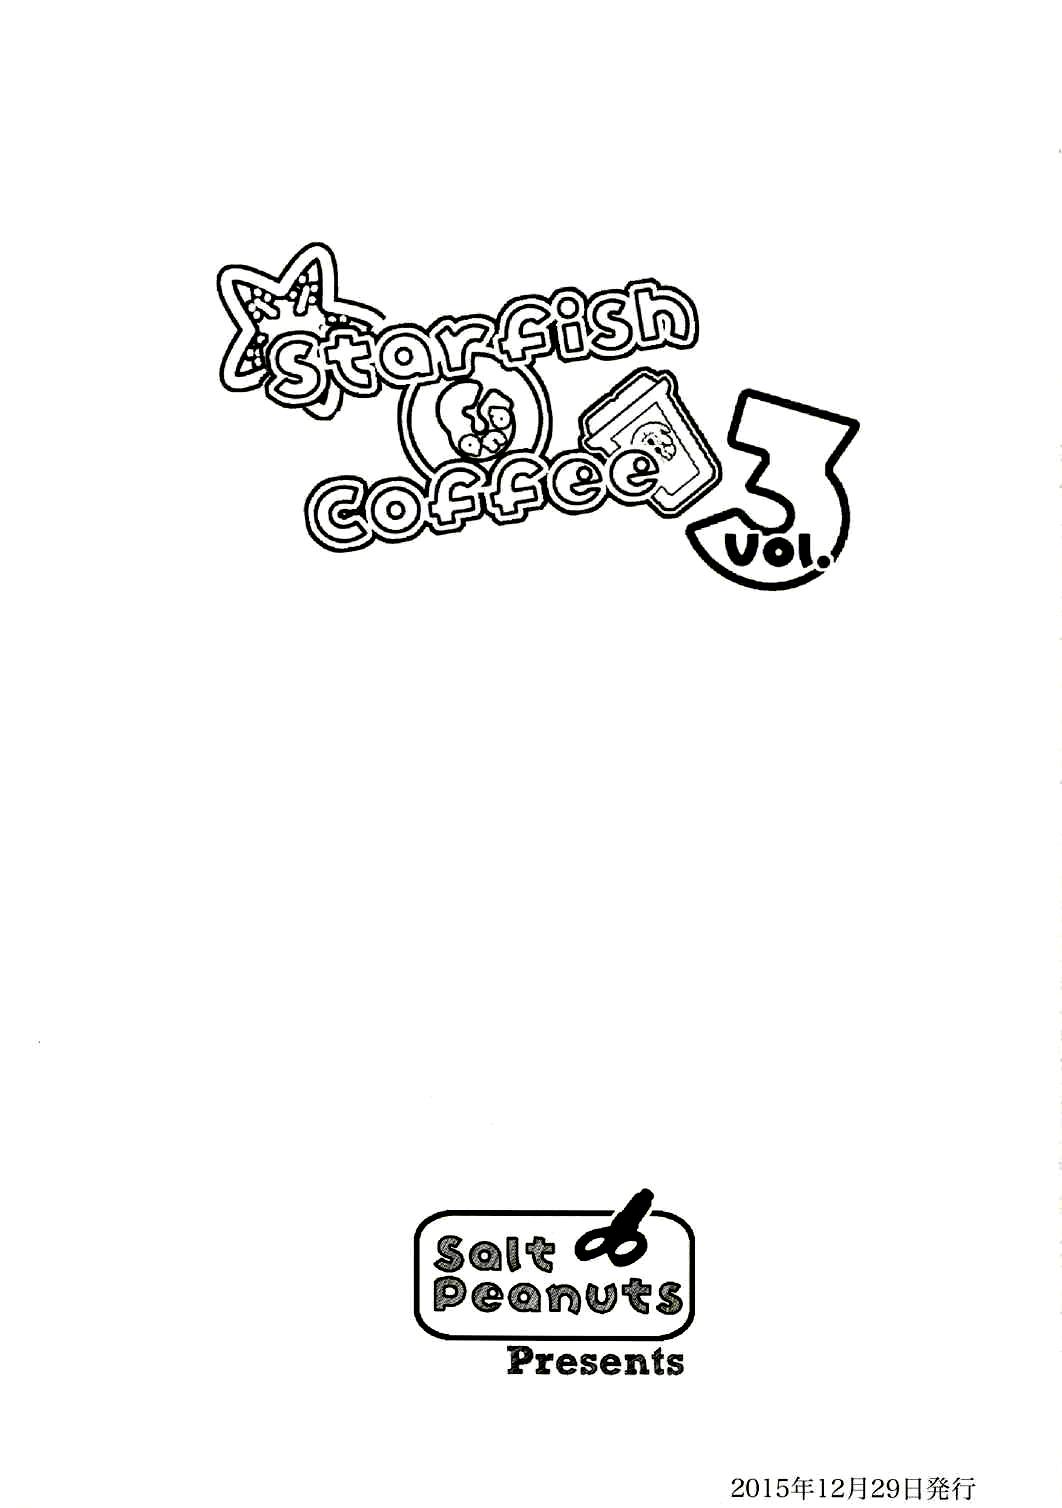 Chupada Starfish and Coffee Vol. 3 - Nichijou Chat - Page 4